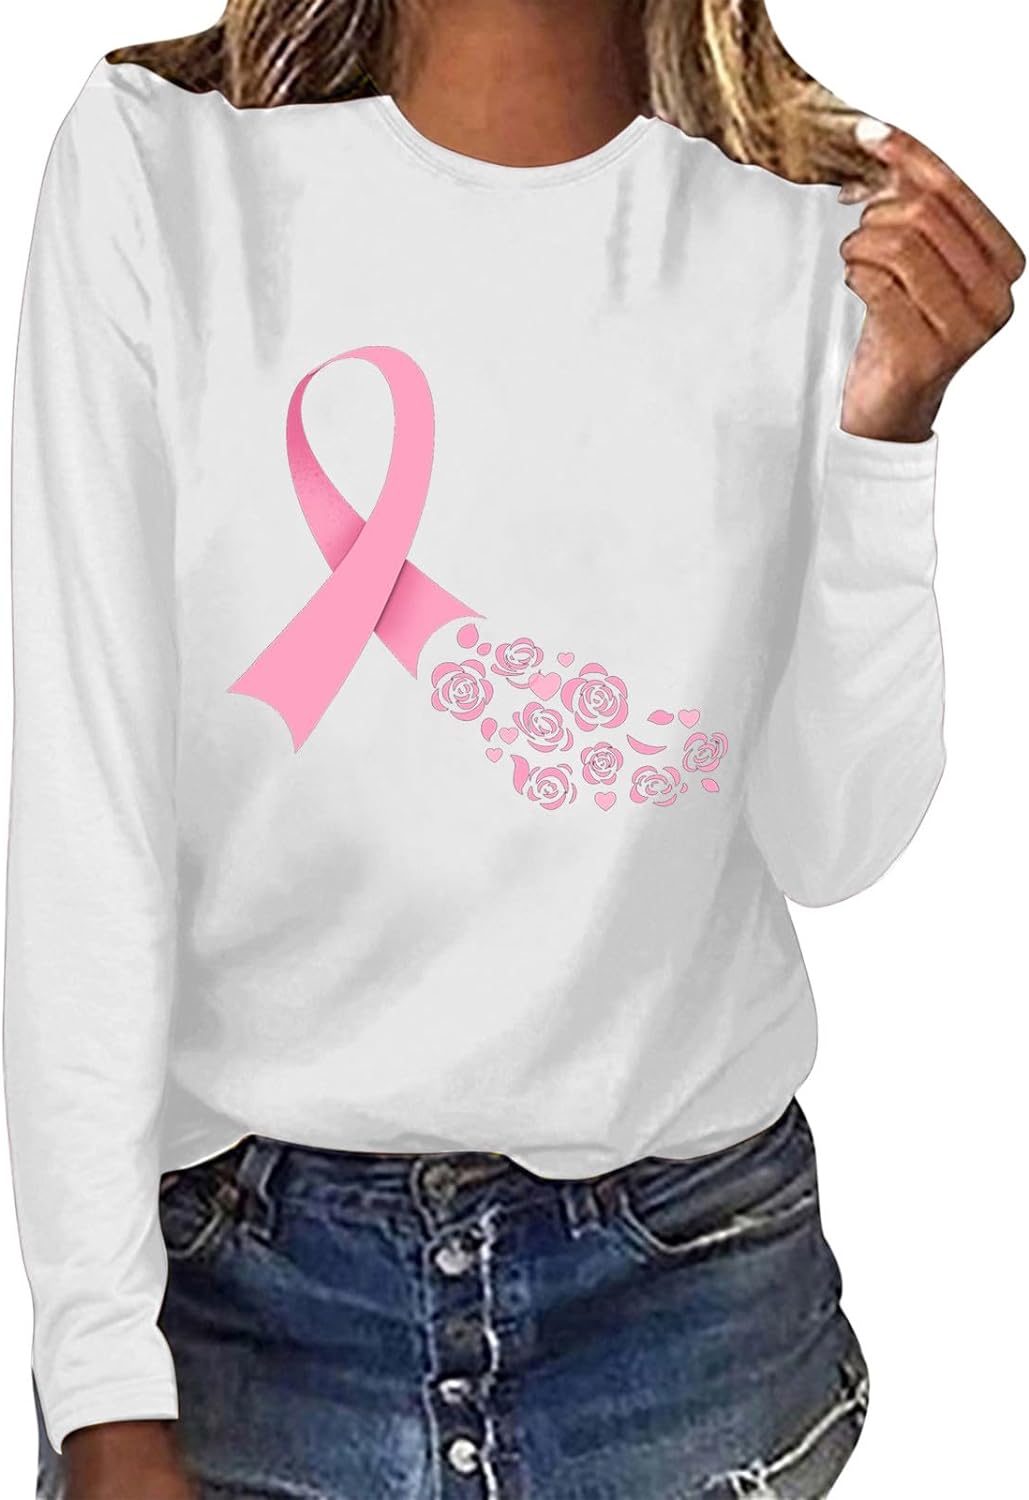 Breast Cancer Awareness Tops for Women Cute Long Sleeve Pink Ribbon Print Shirts Causal Crewneck Tshirt Blouse